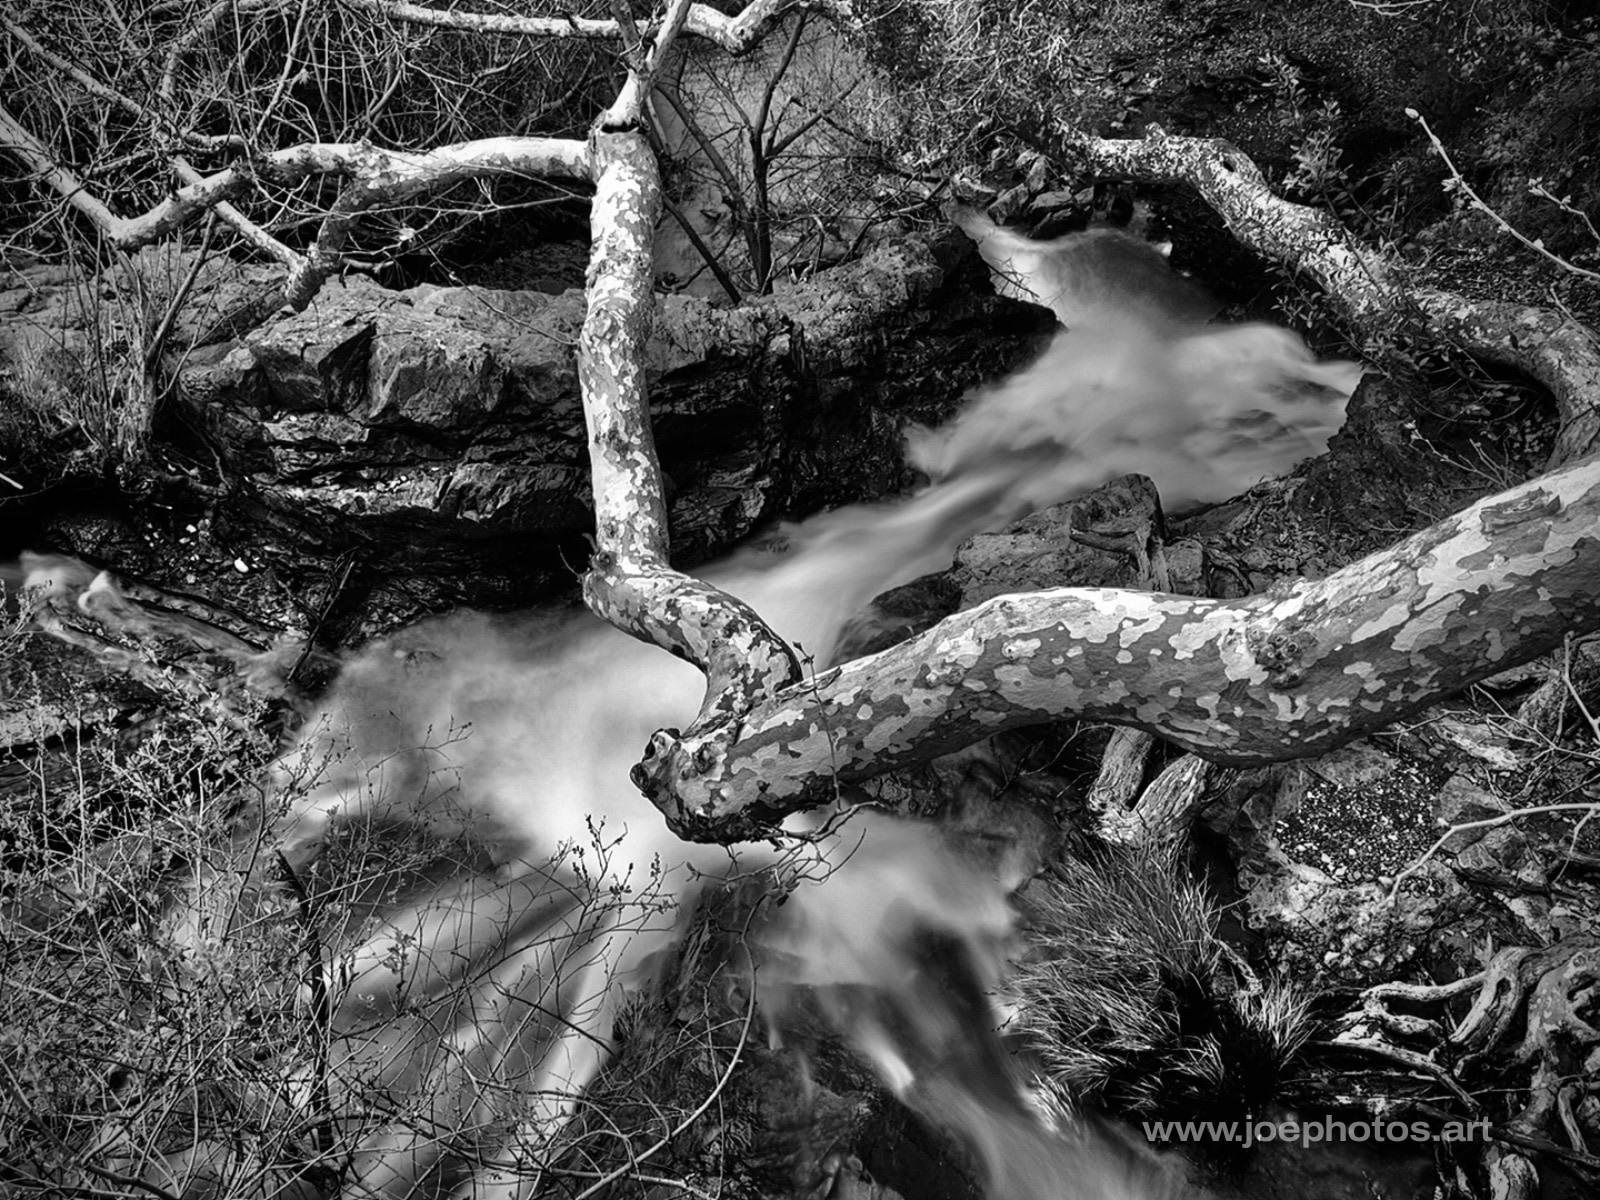 Monochrome abstract long exposure rushing creek.